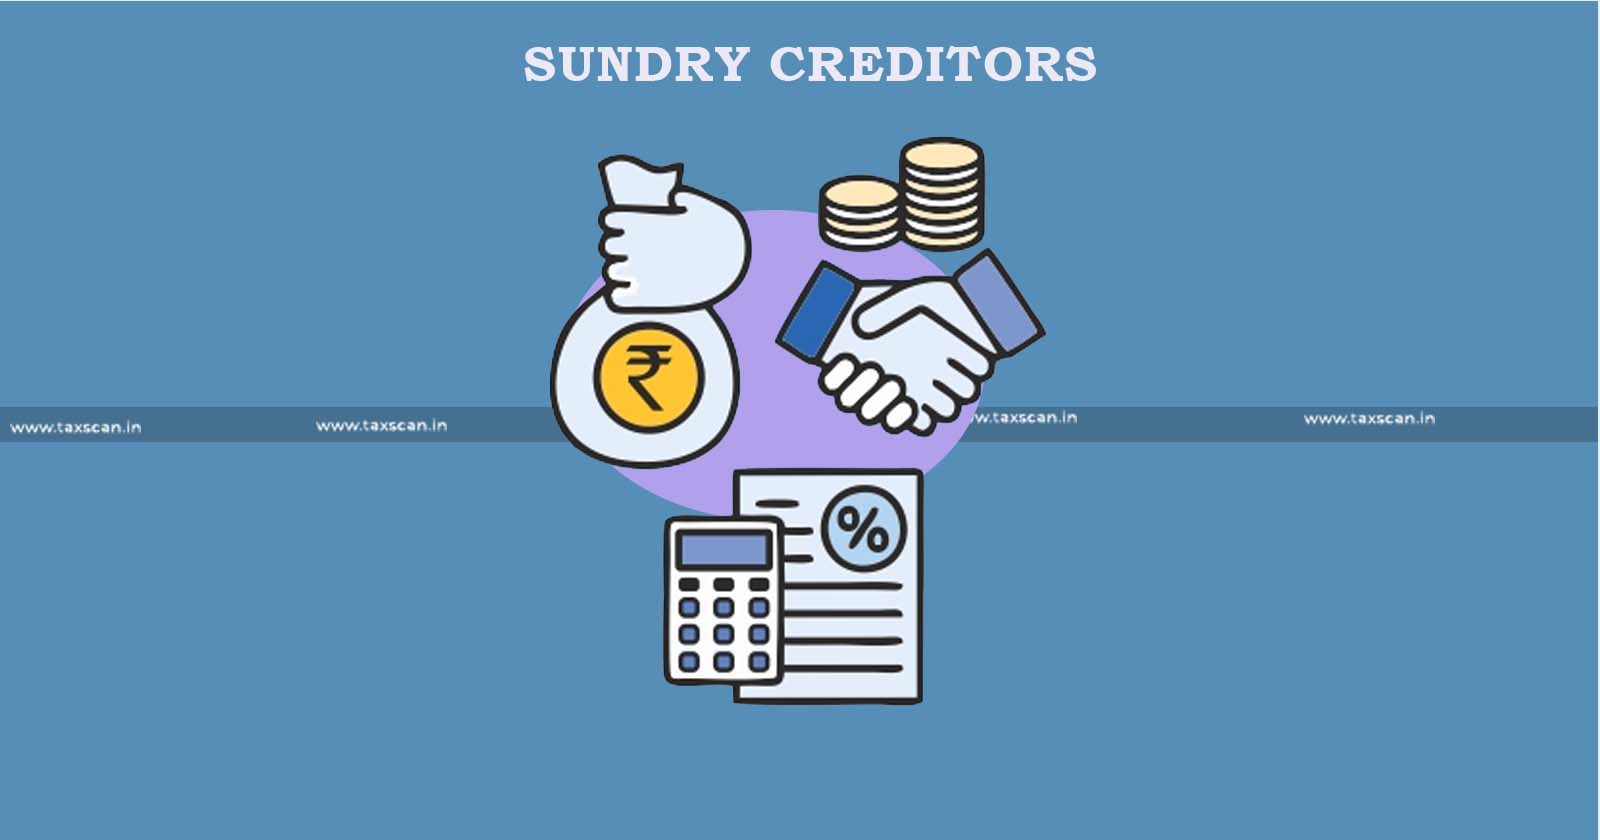 Addition made on Account of Sundry Creditors Balance - ITAT Directs Re-adjudication - Re-adjudication - ITAT - Sundry Creditors Balance - taxscan